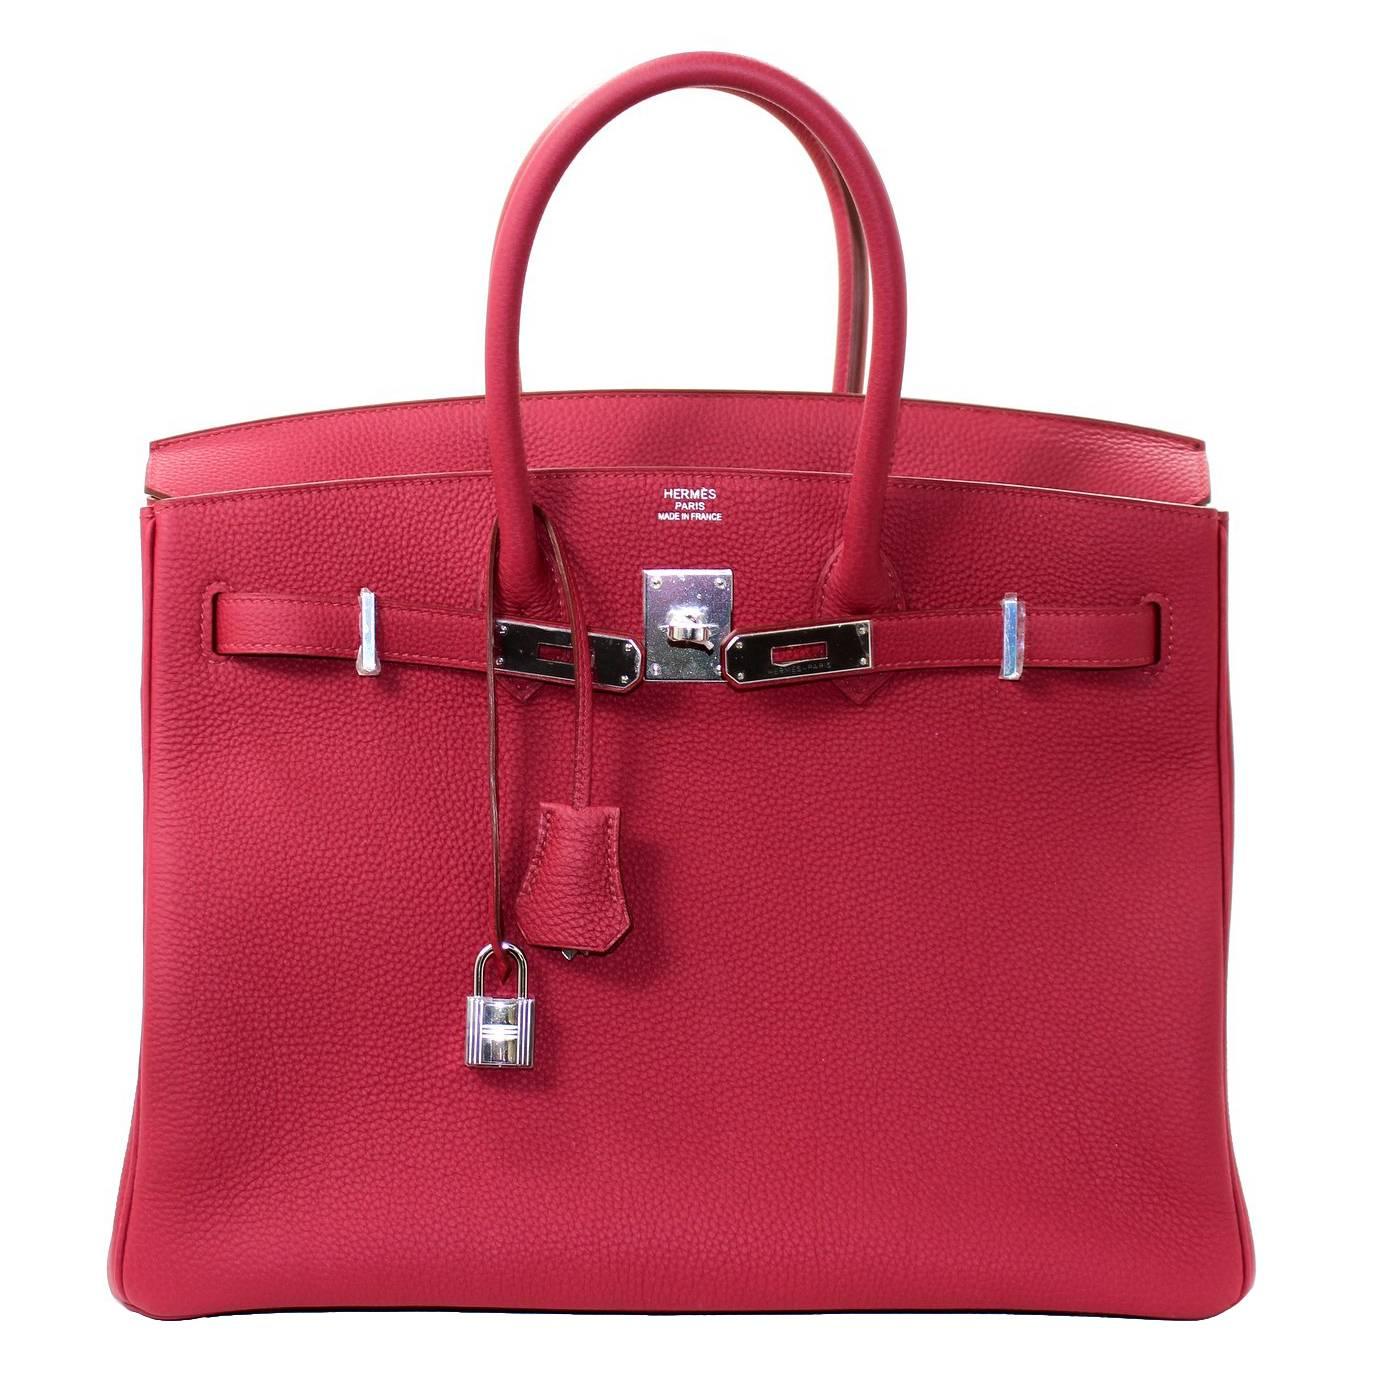 Hermès Rubis Togo Birkin Bag- 35 cm, PHW Ruby Red